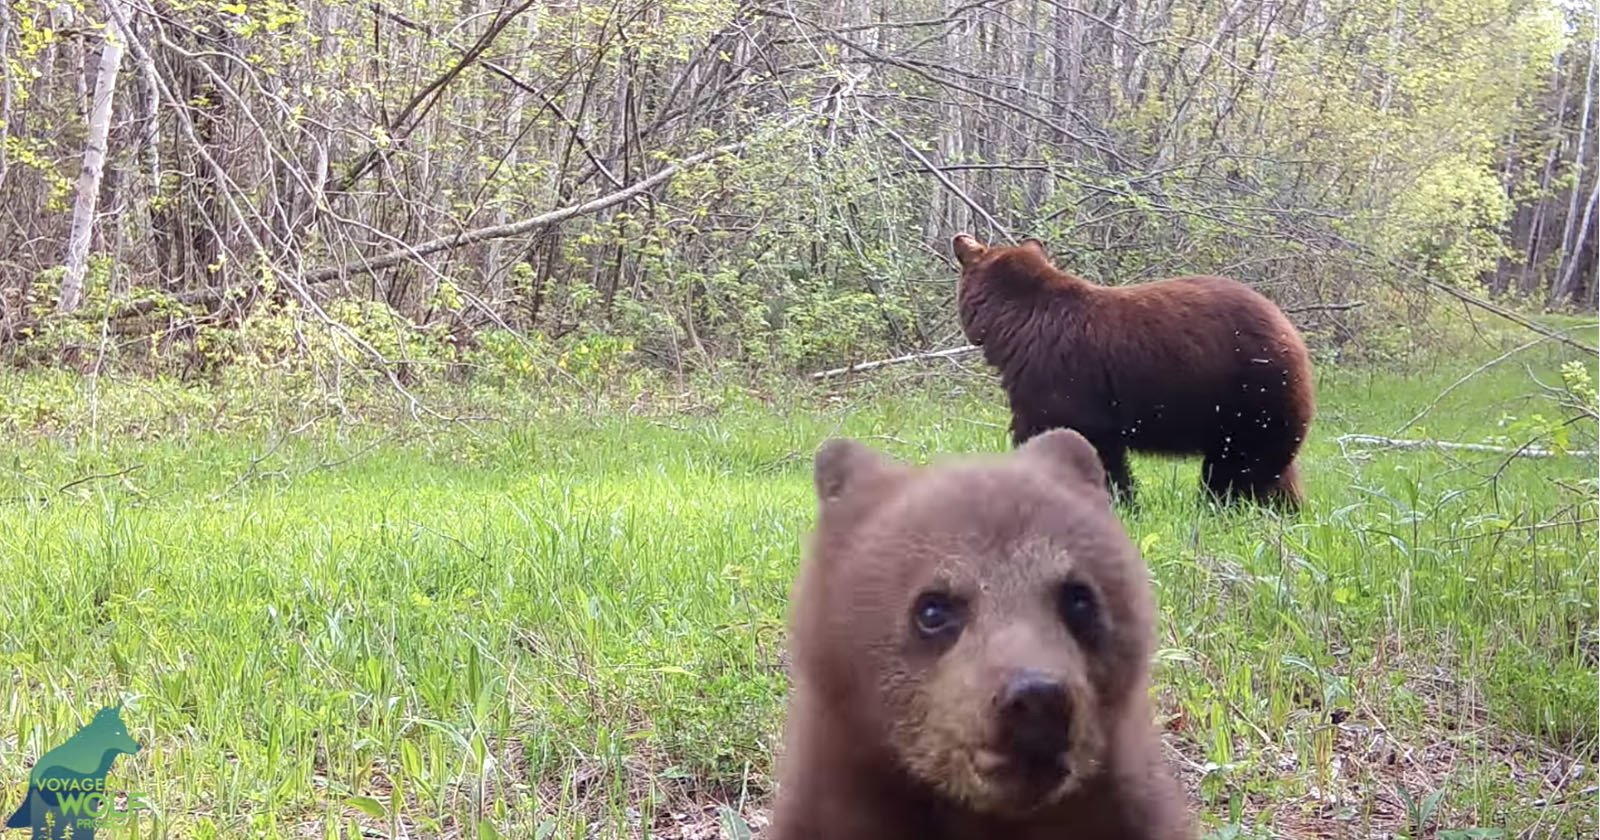 Bear Cub Being a Twerp Attacks Trail Camera